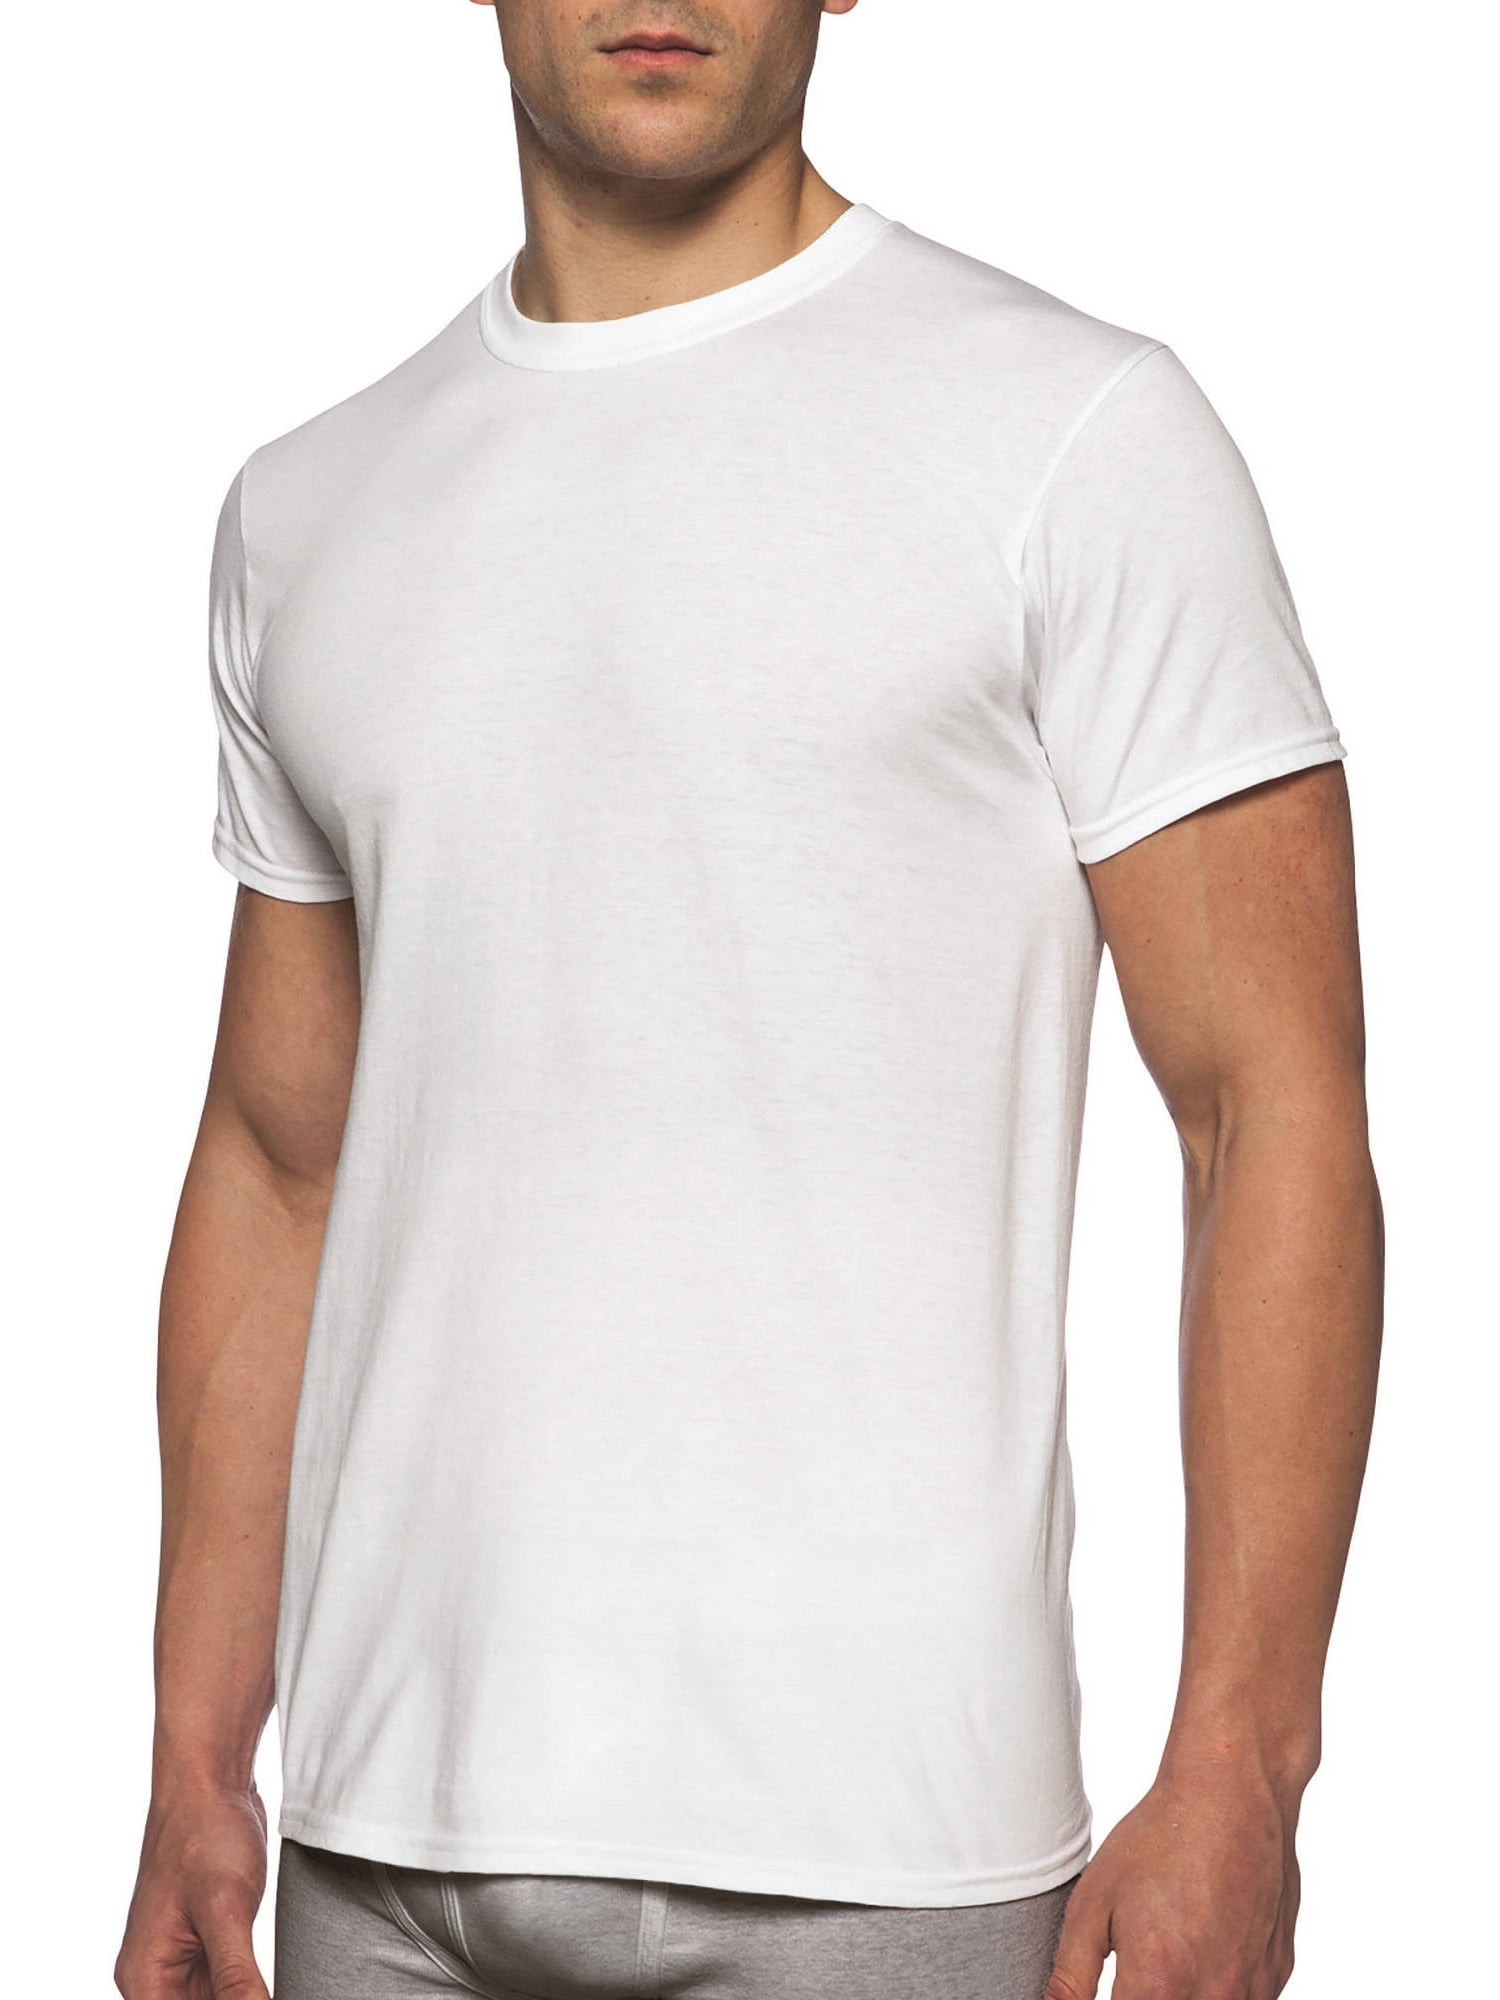 100% Cotton Crew Neck Top Men's Short Sleeve Basic Plain T-Shirt Sizes S-2XL 